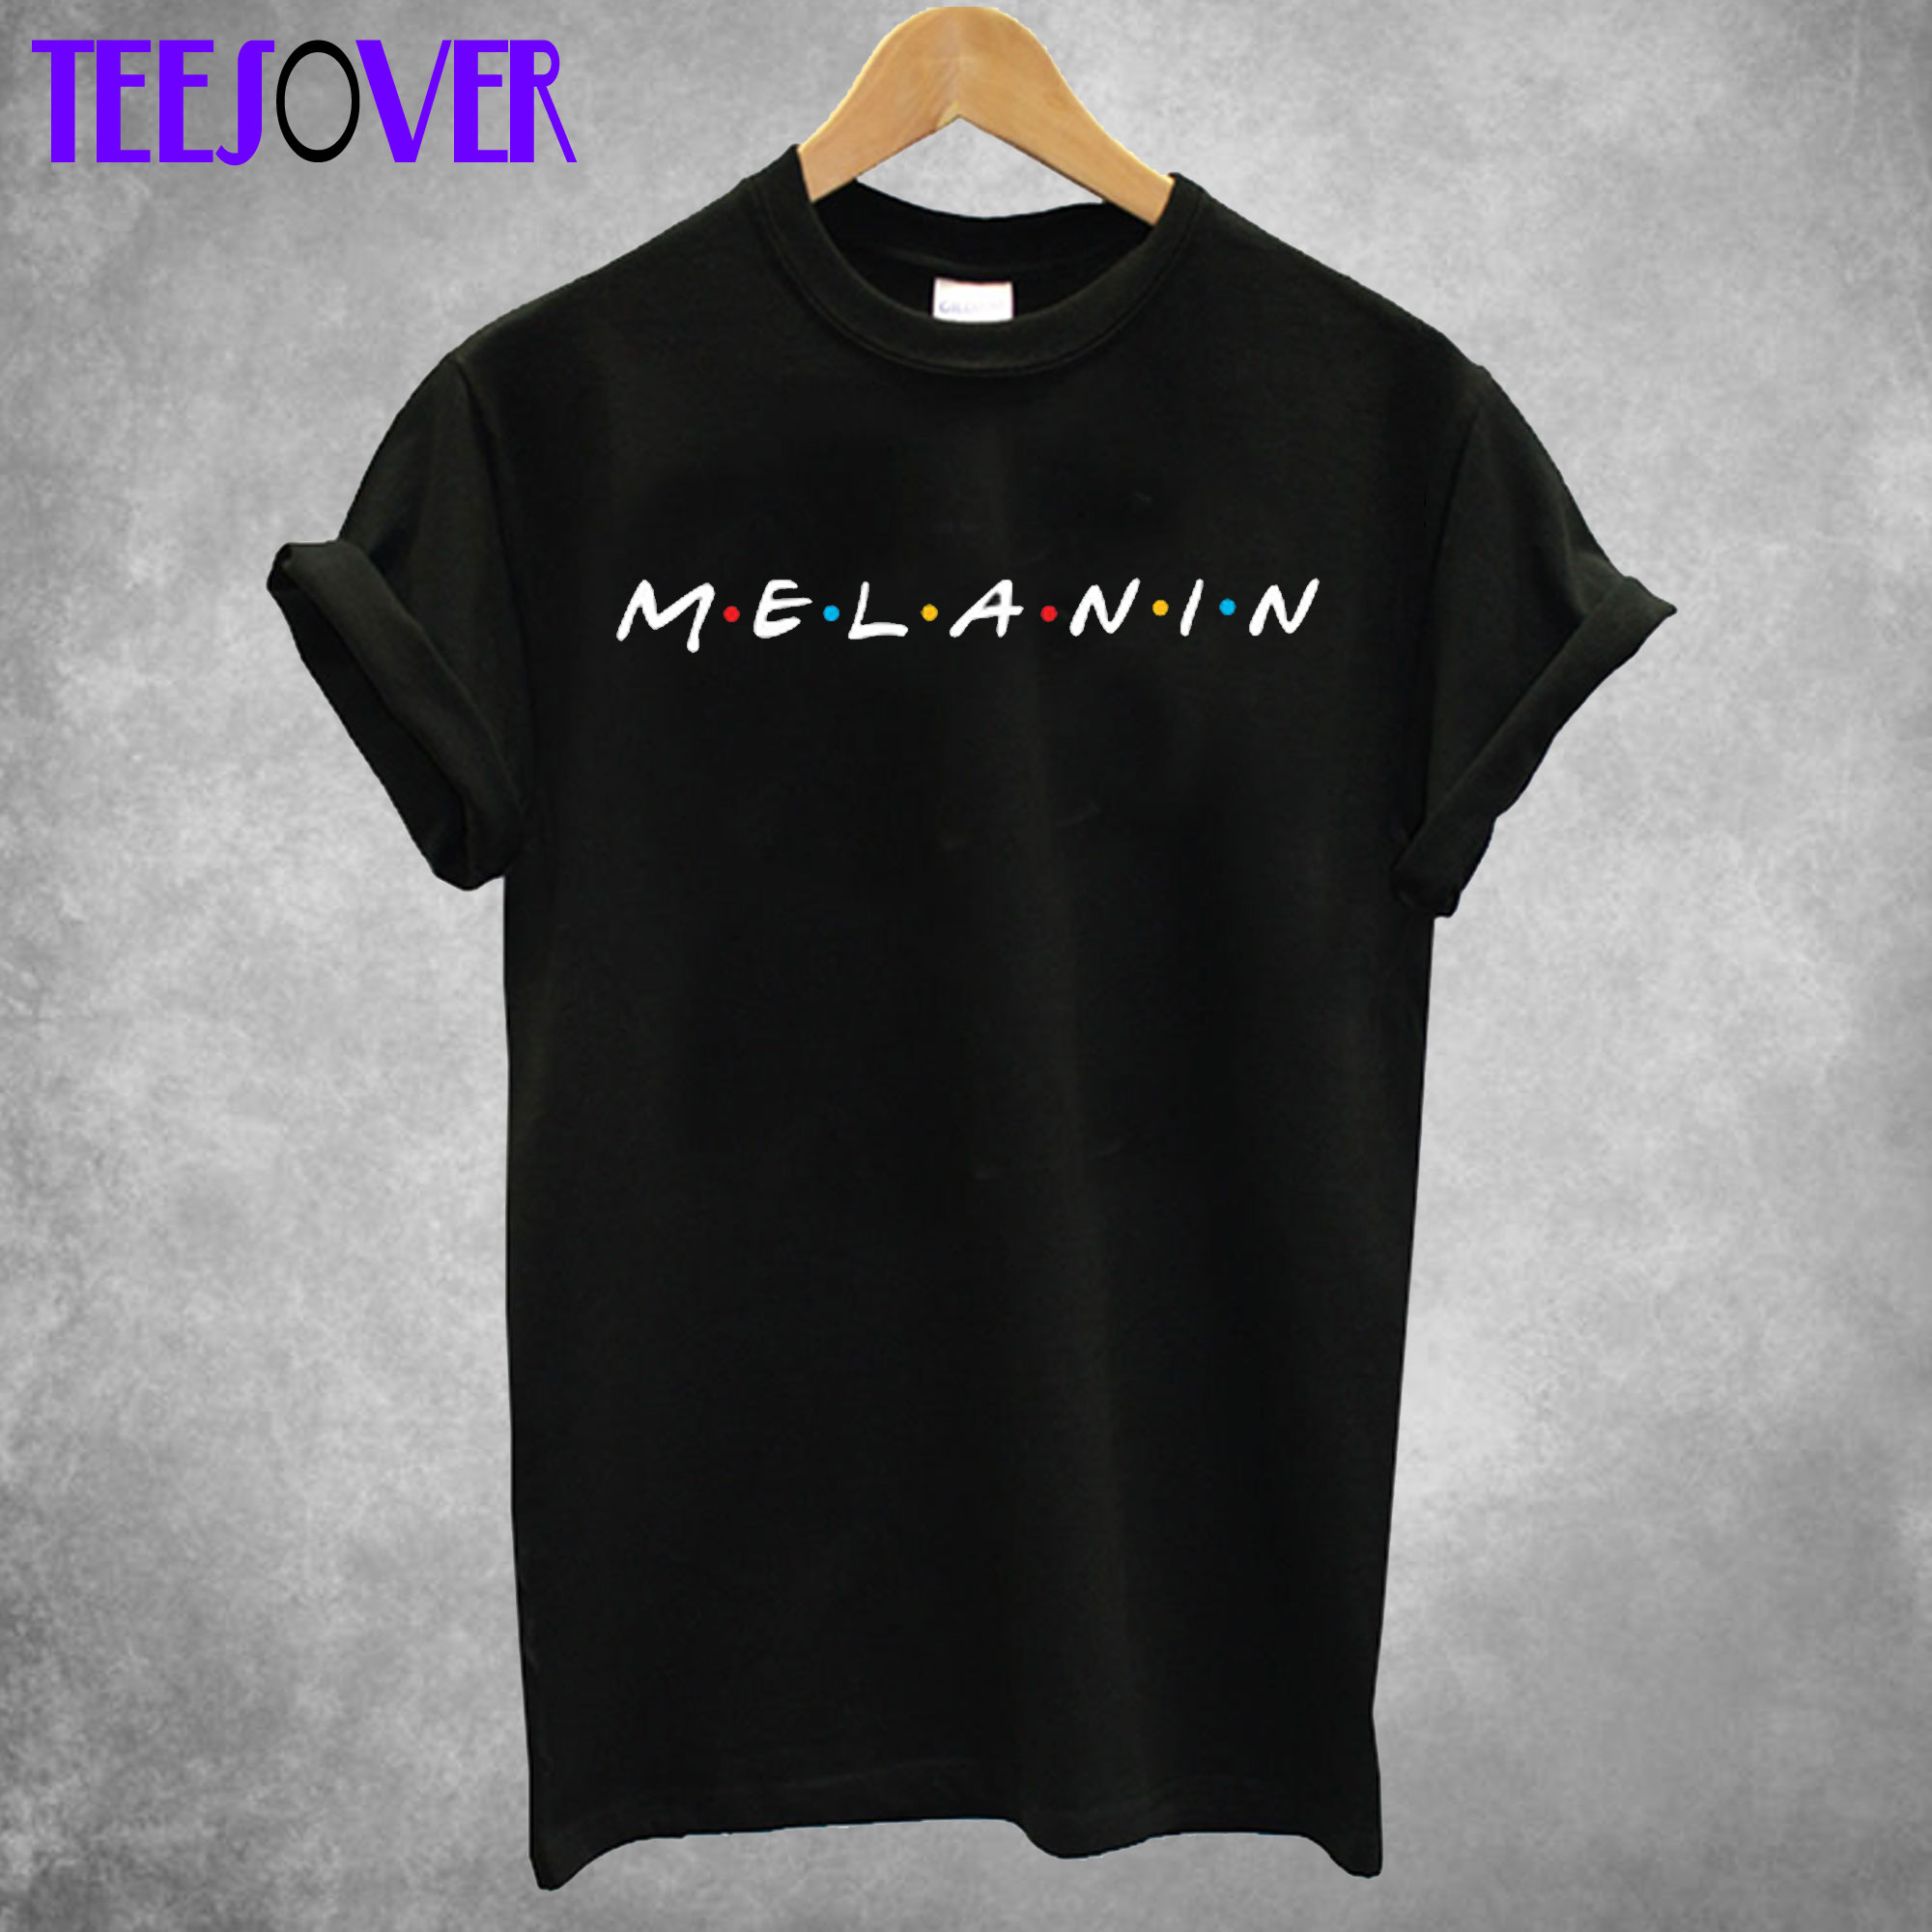 Melanin T shirt size